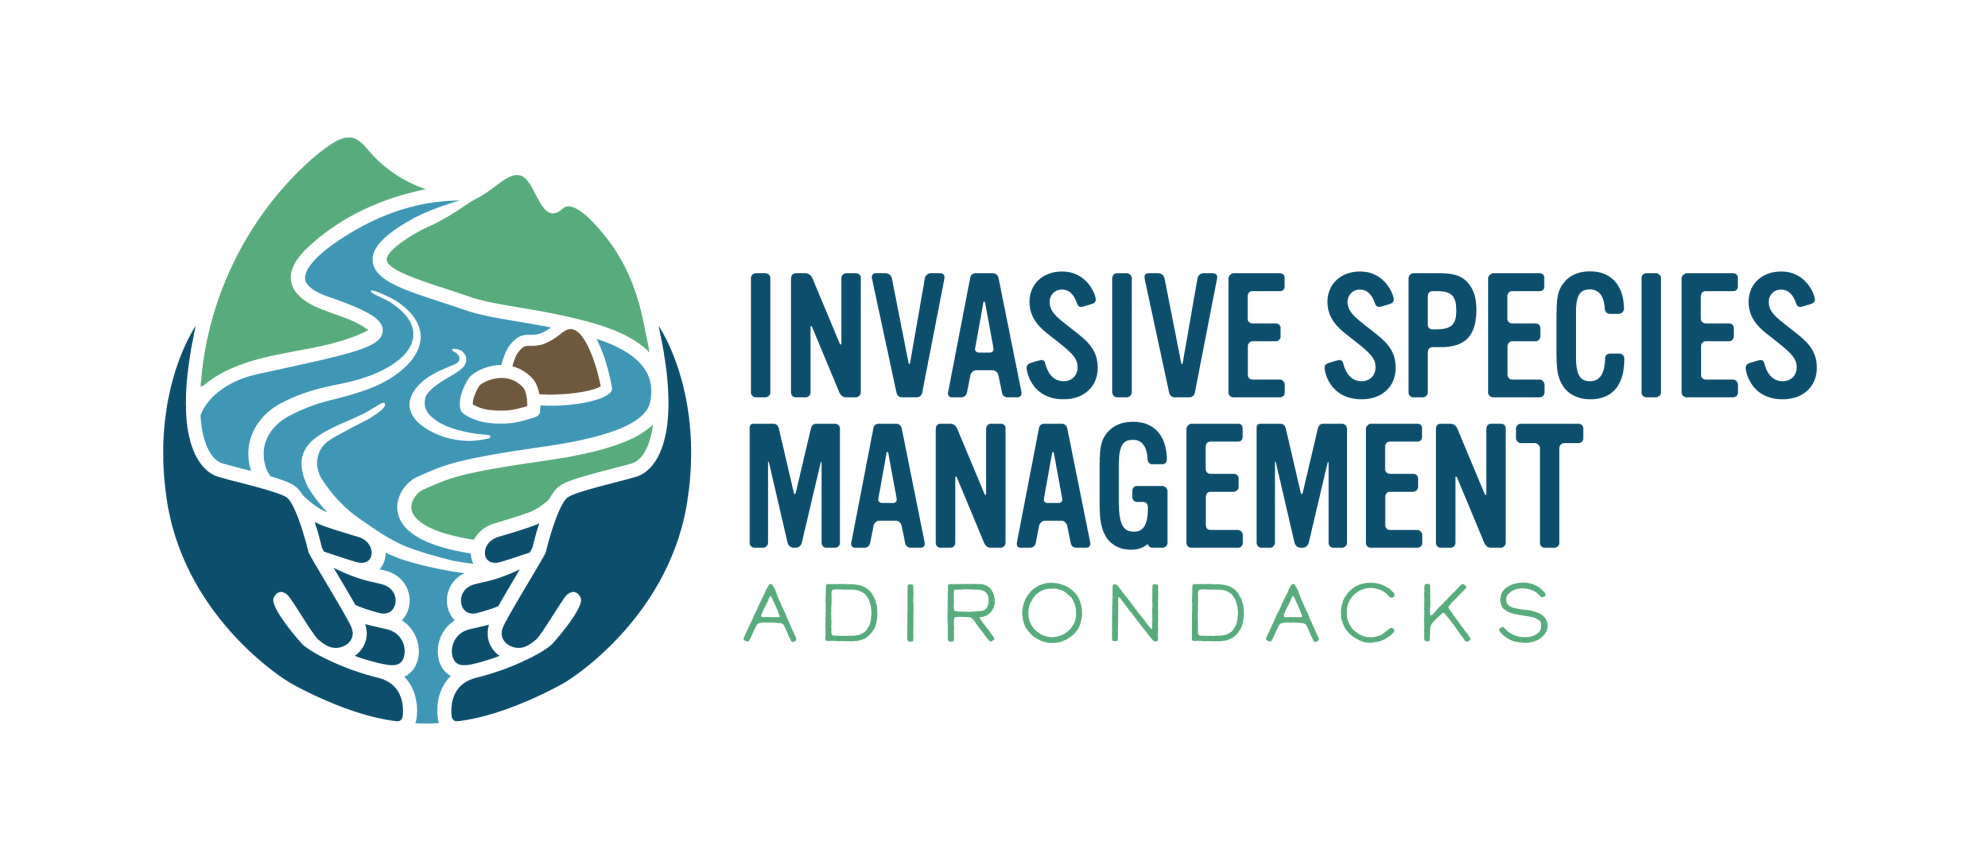 Adirondack Park Invasive Plant Program